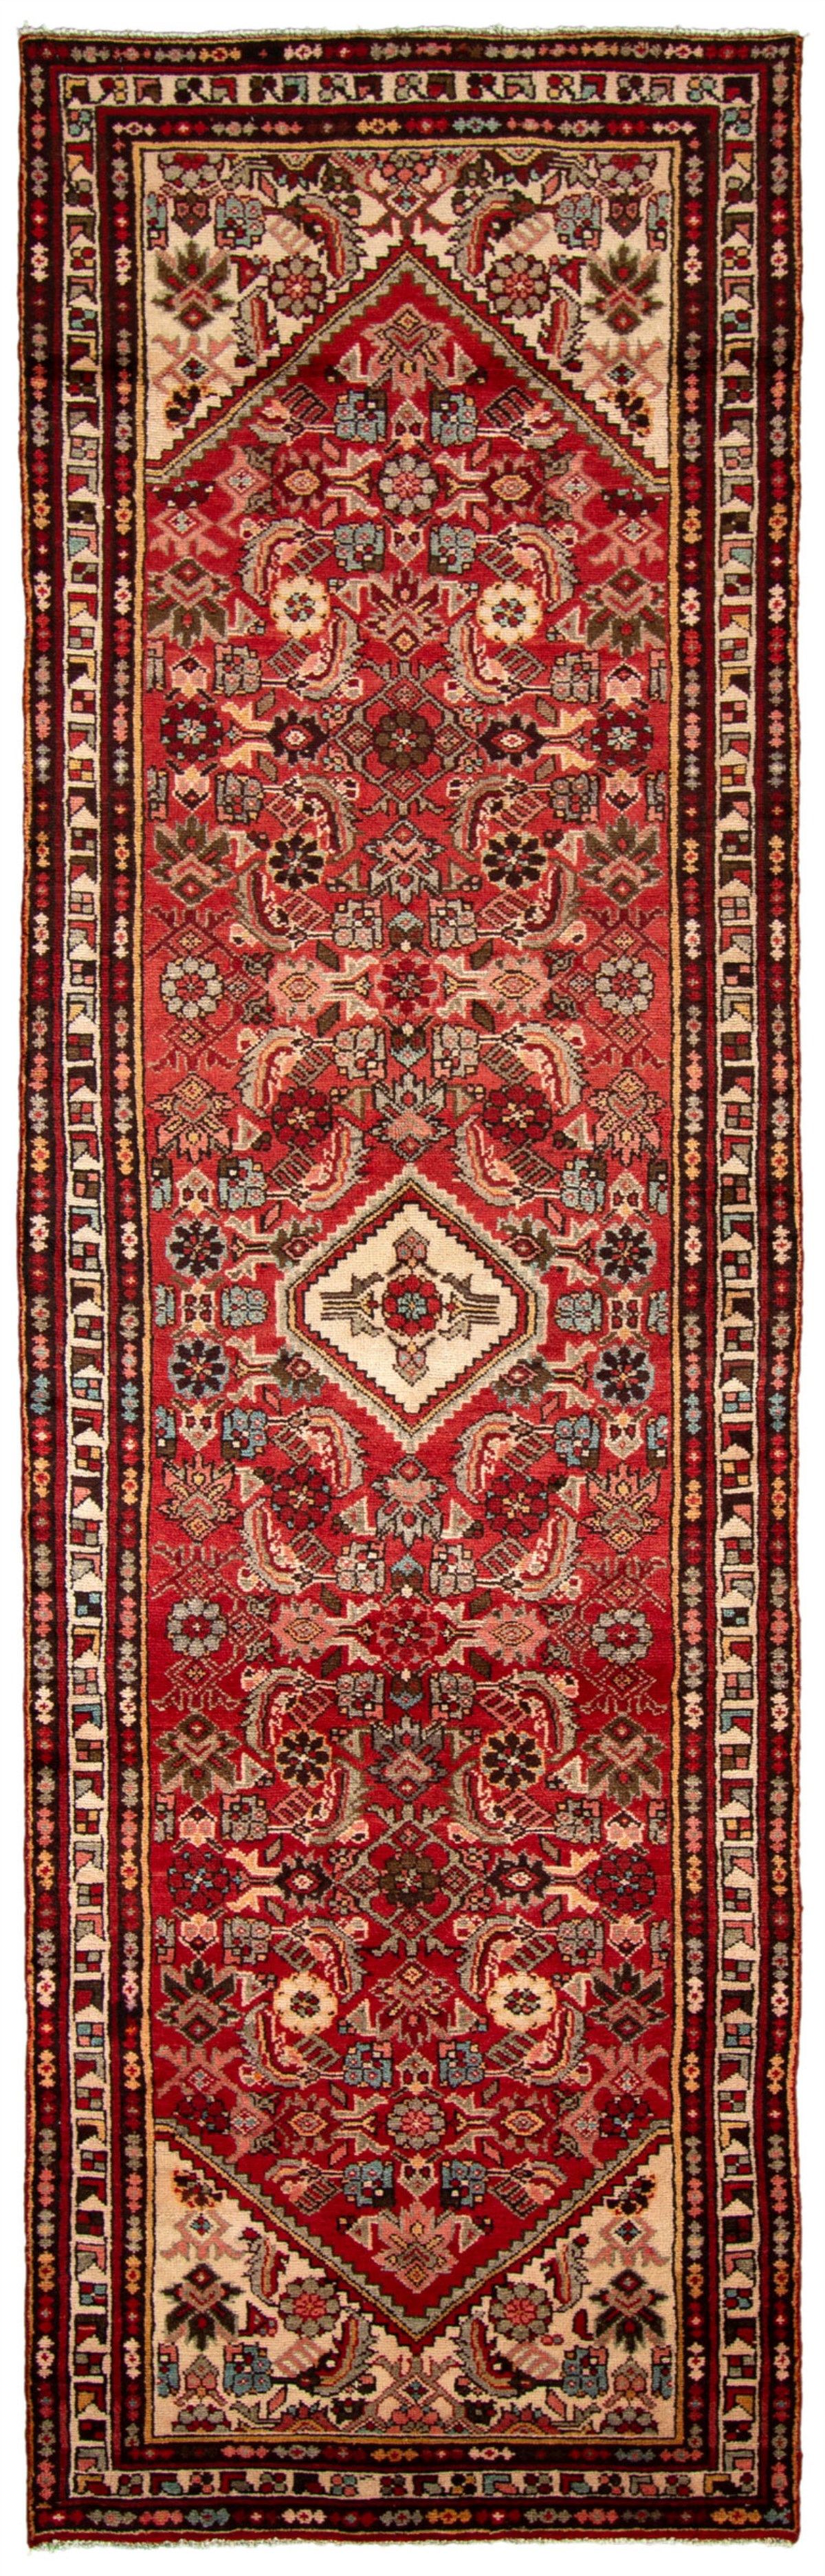 Traditional Persian Handmade Bokhara Circular Rug Burgundy/red 5' 3 x 5' ft Wool